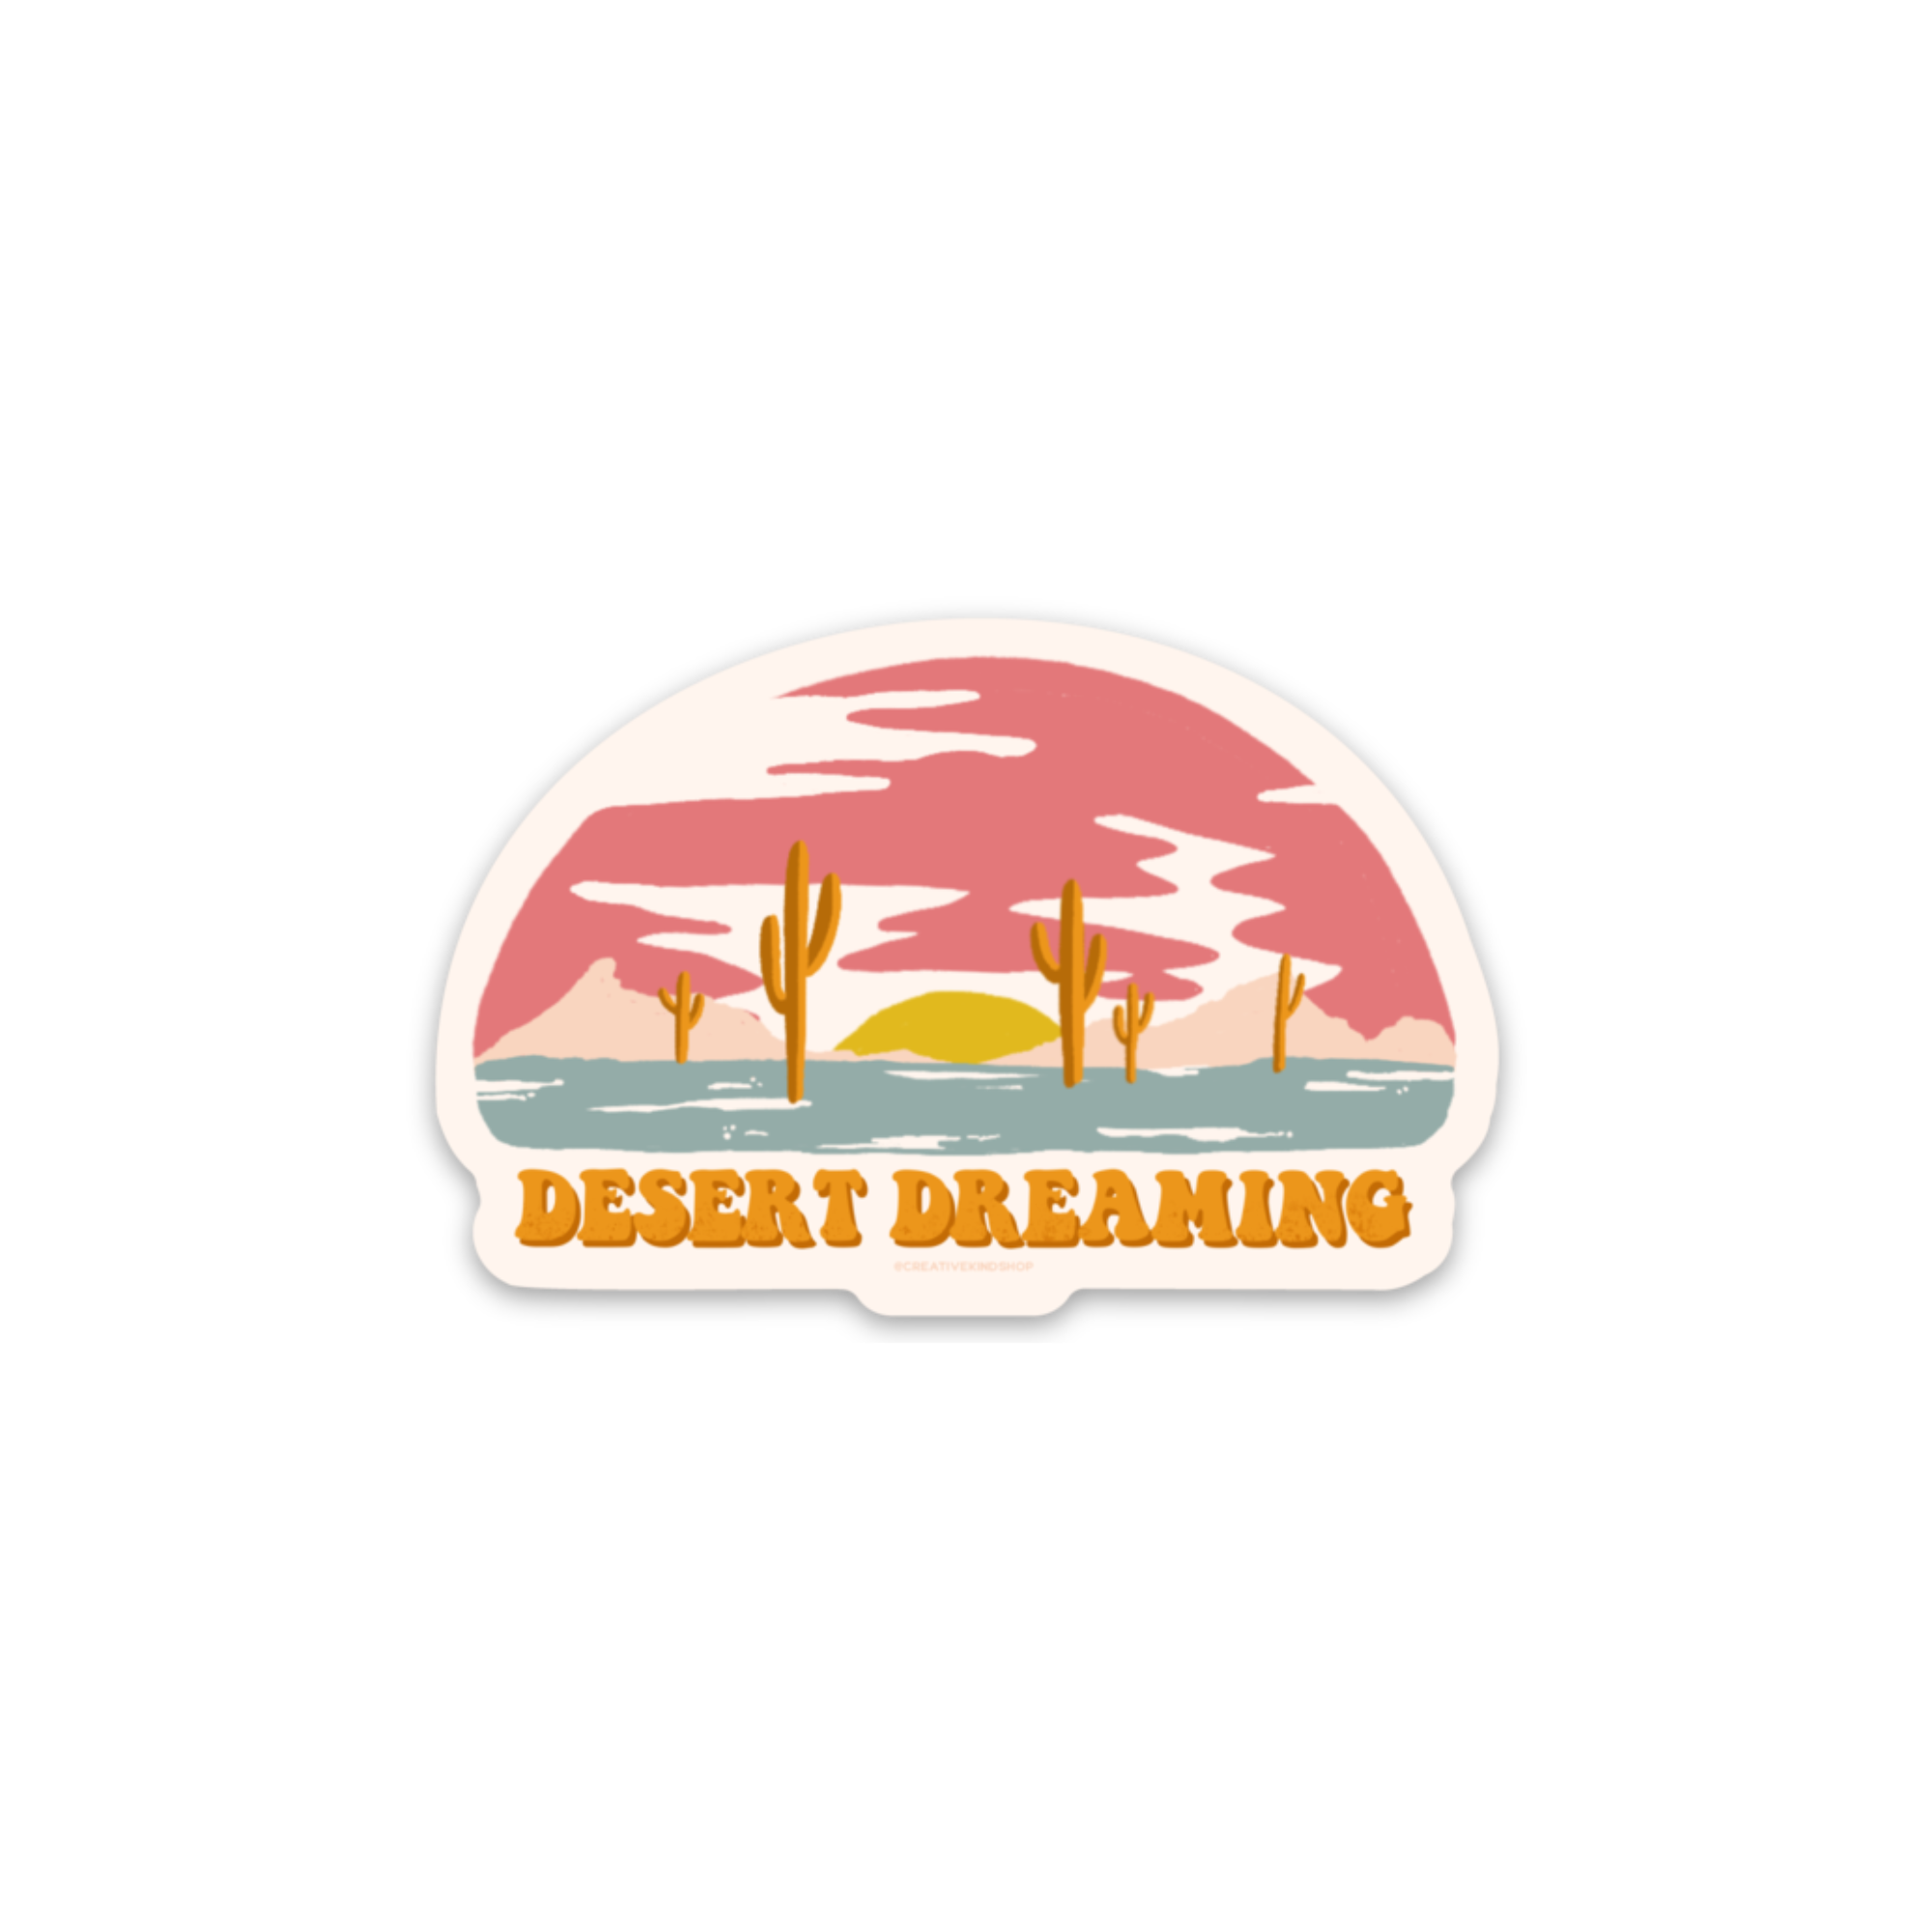 Tan die cut sticker with desert sunset above the words "desert dreaming"